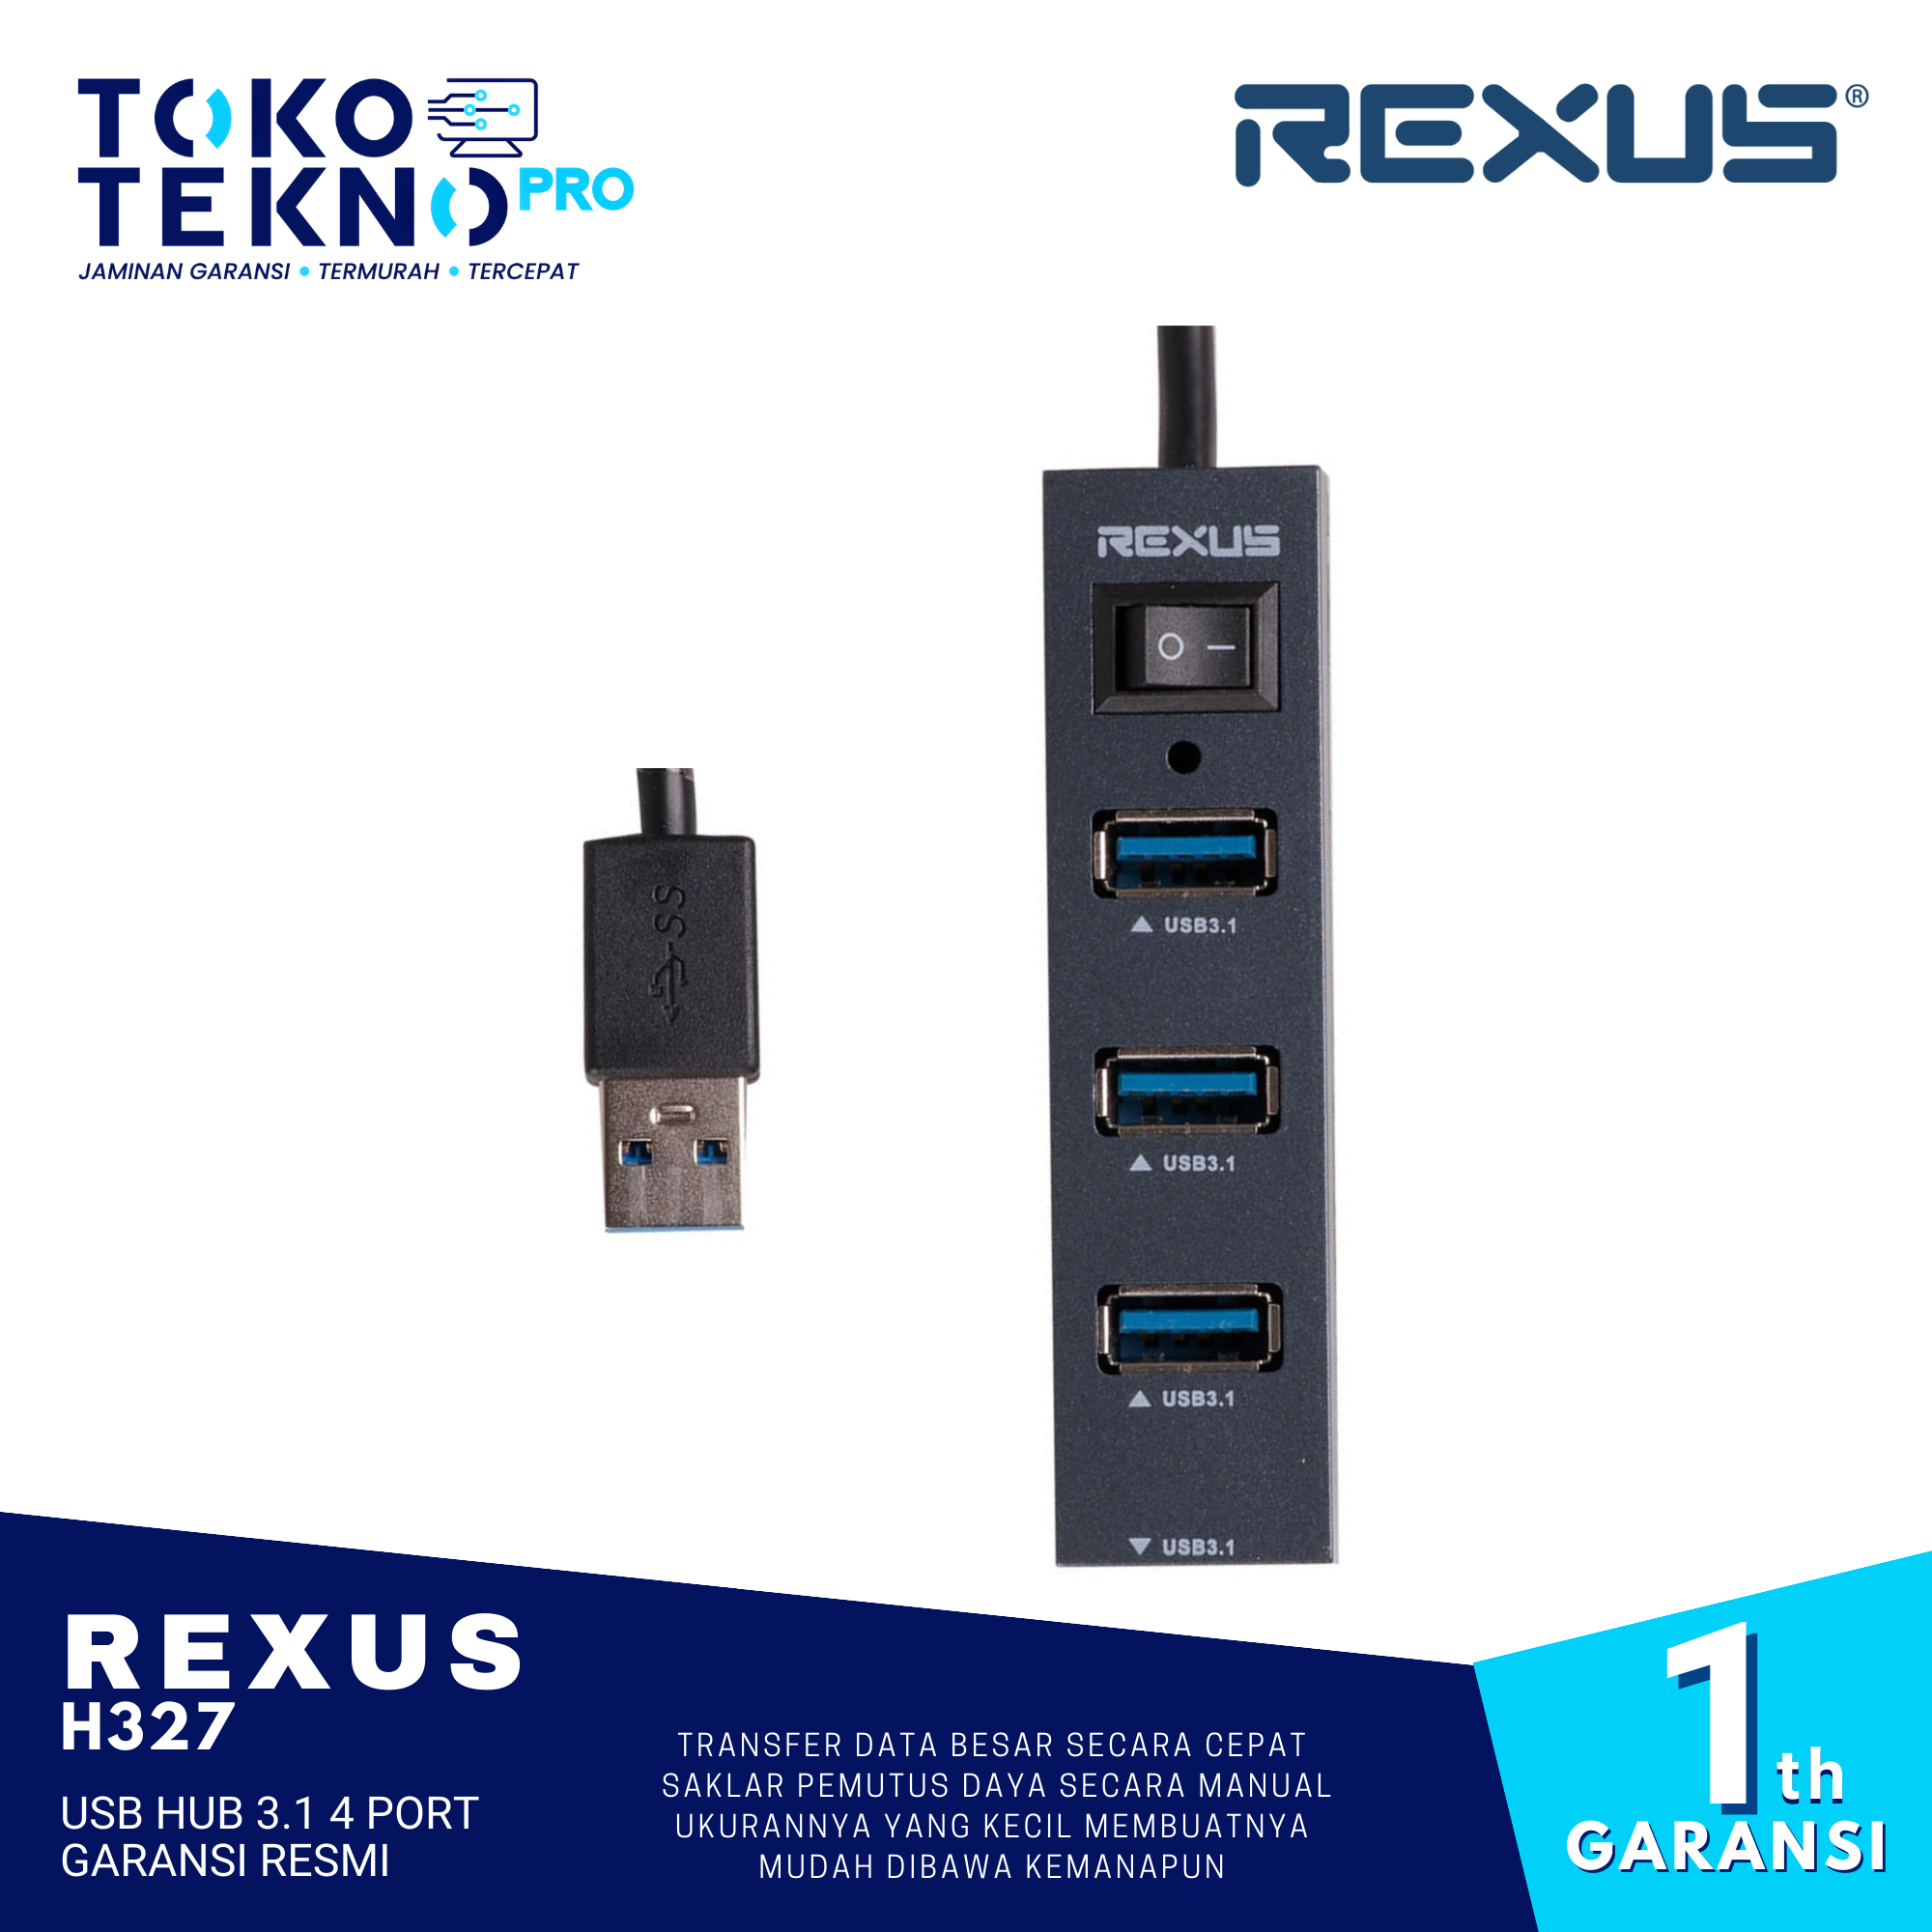 Rexus H327 USB Hub 3.1 4 Port